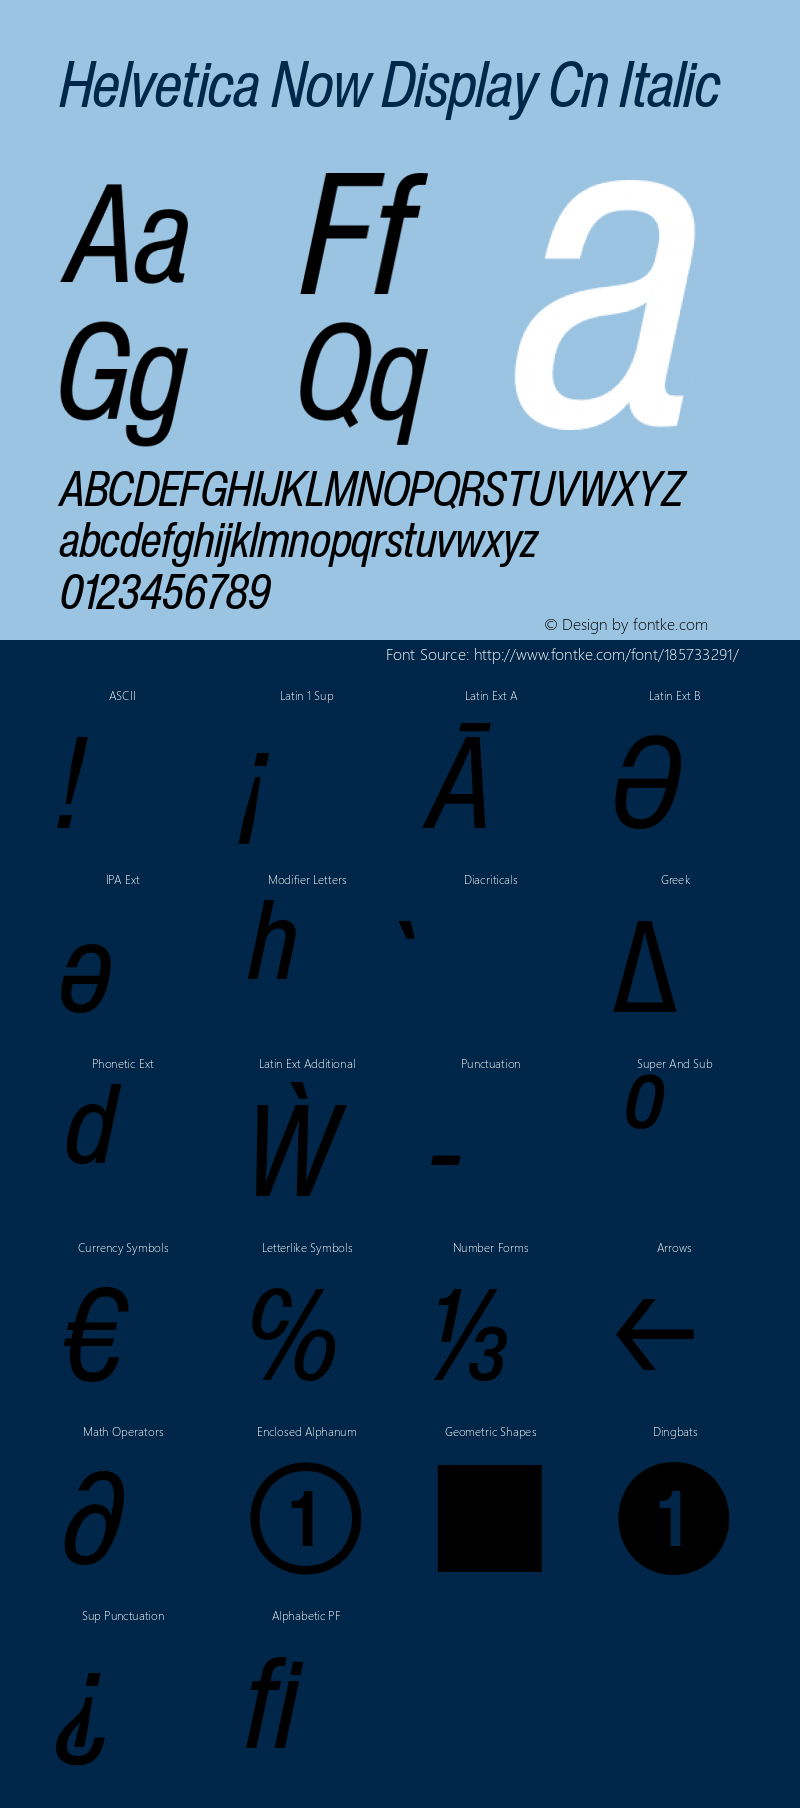 Helvetica Now Display Cn Ita Version 2.00图片样张